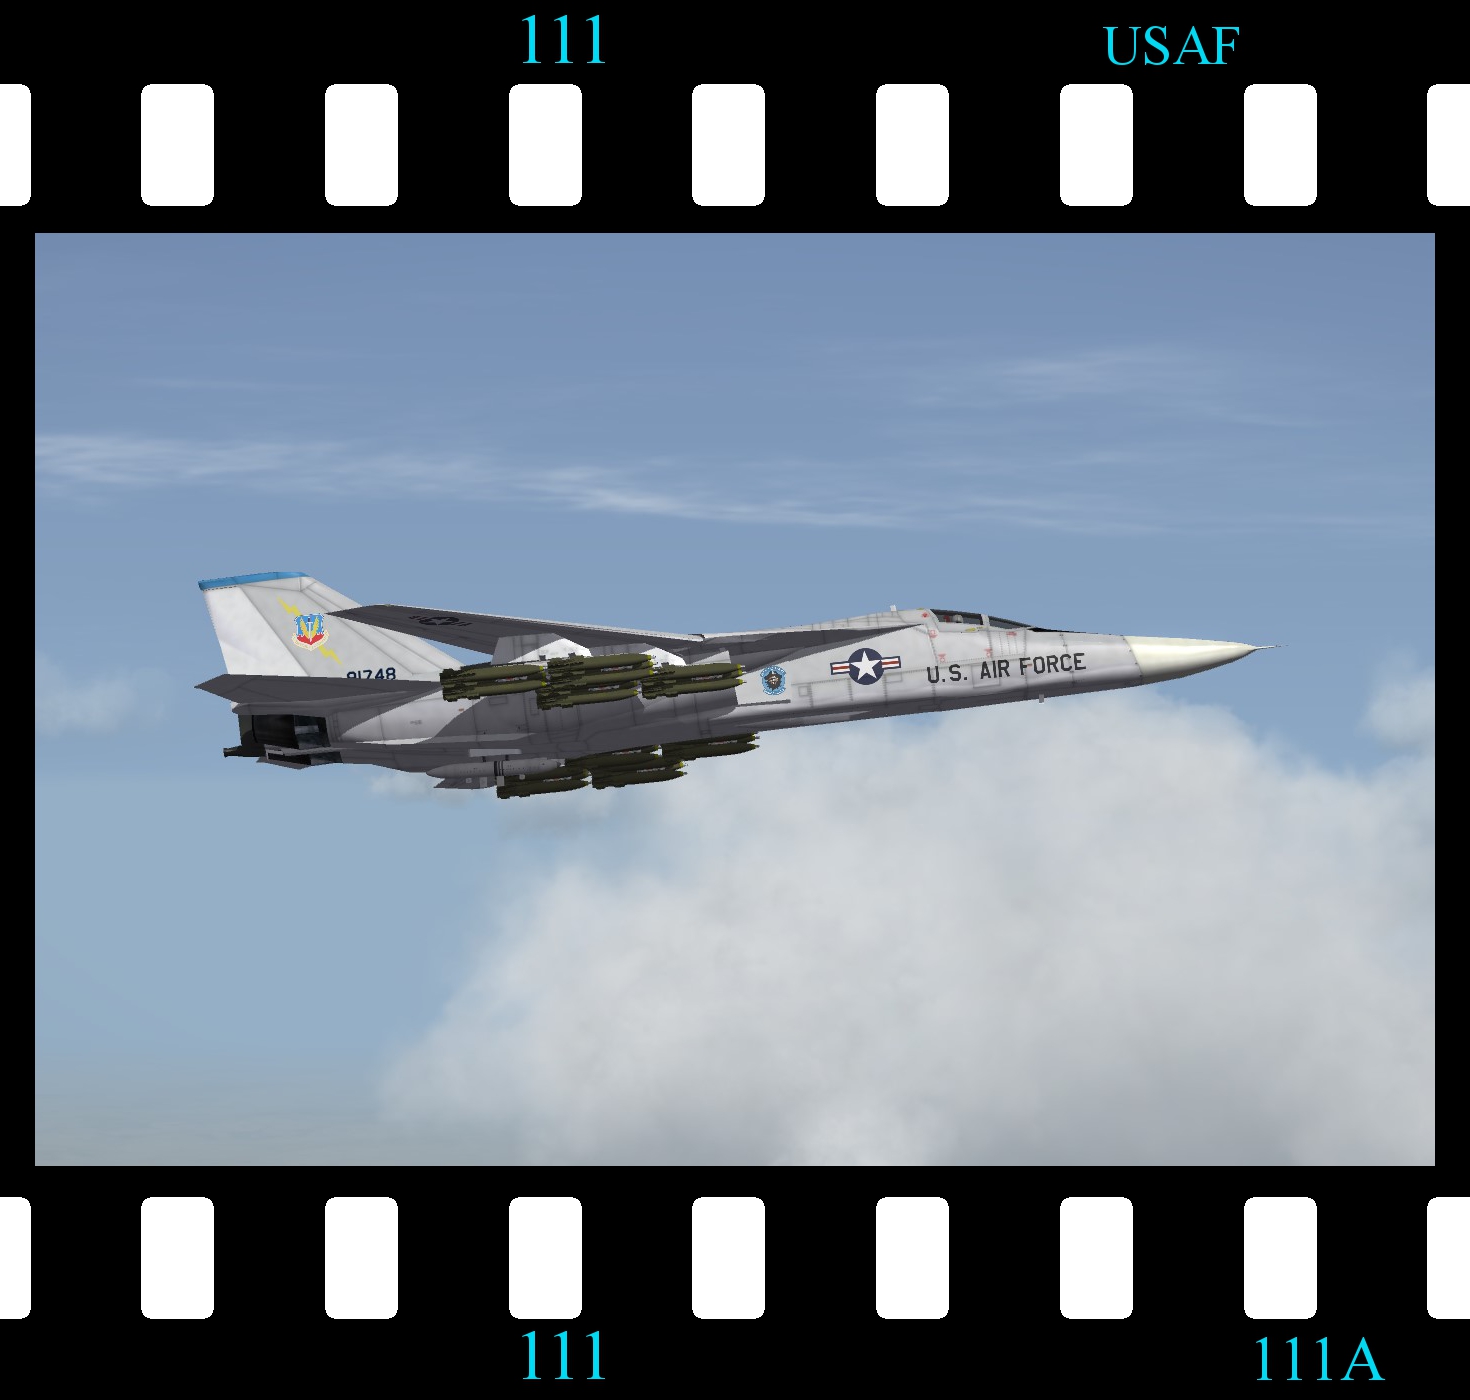 [Fictional] General Dynamics F-111A 'Early TAC'